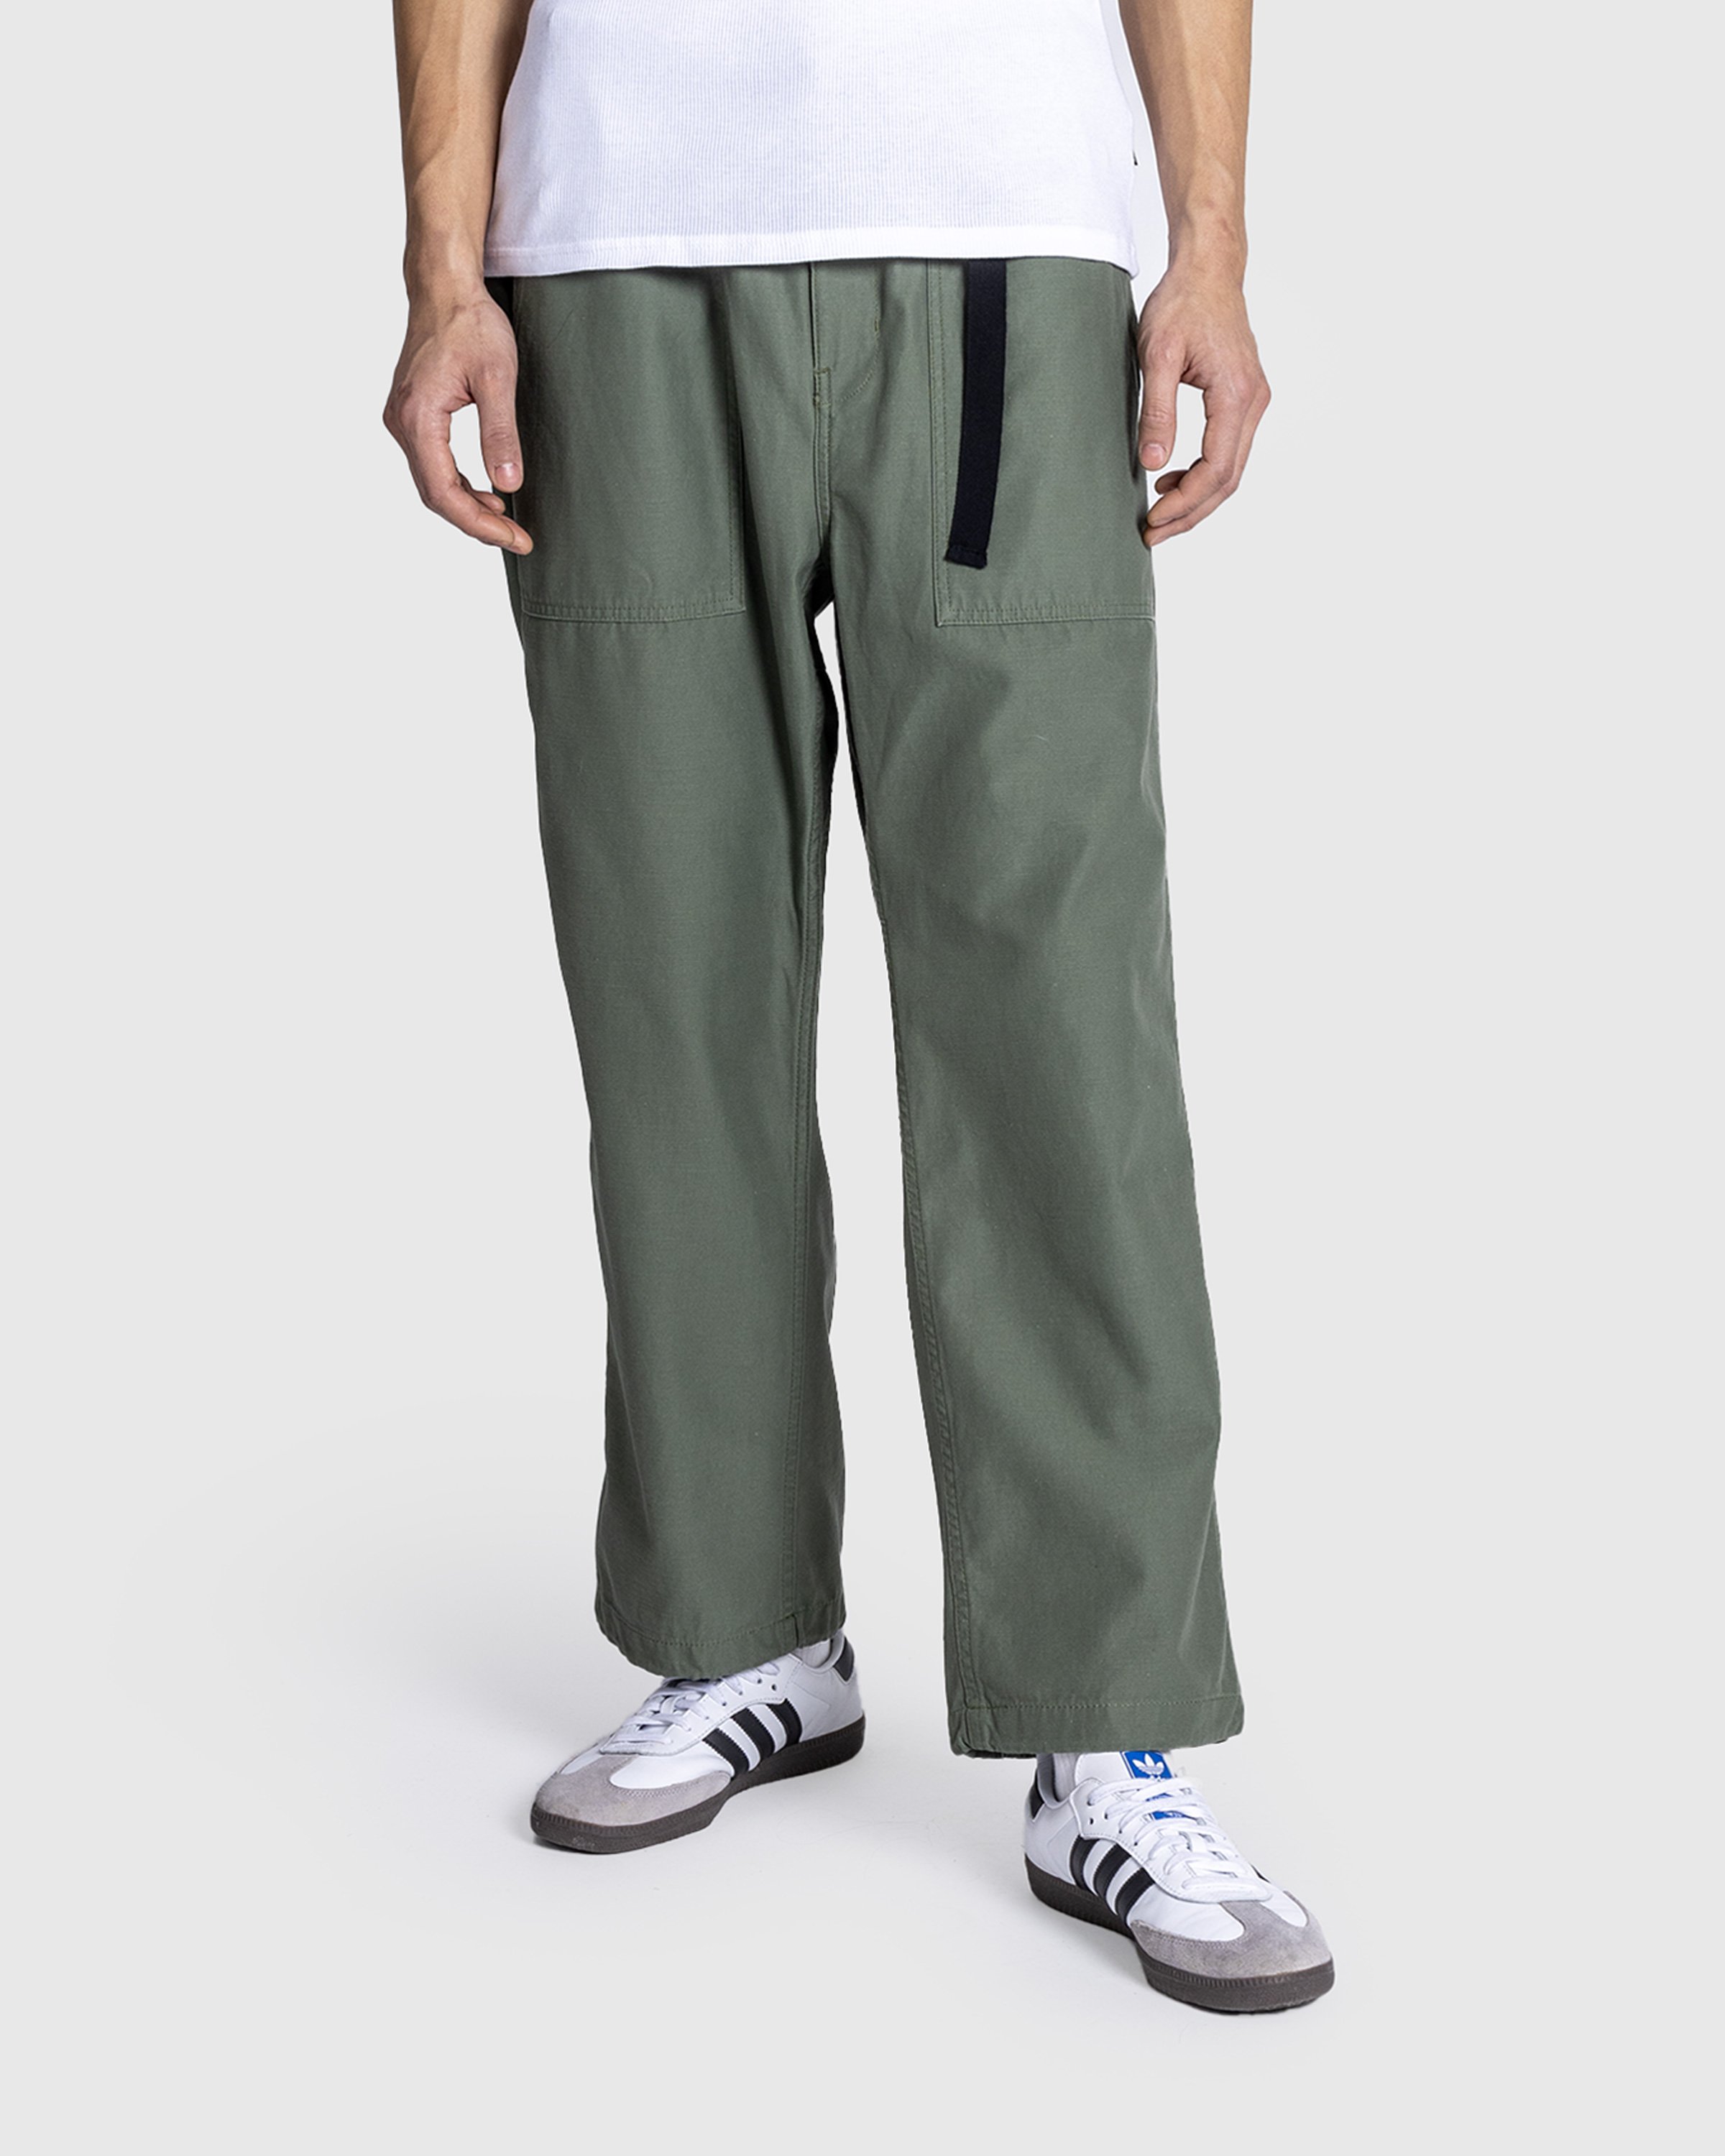 Carhartt WIP - Hayworth Pant Dollar Green /rinsed - Clothing - Green - Image 2